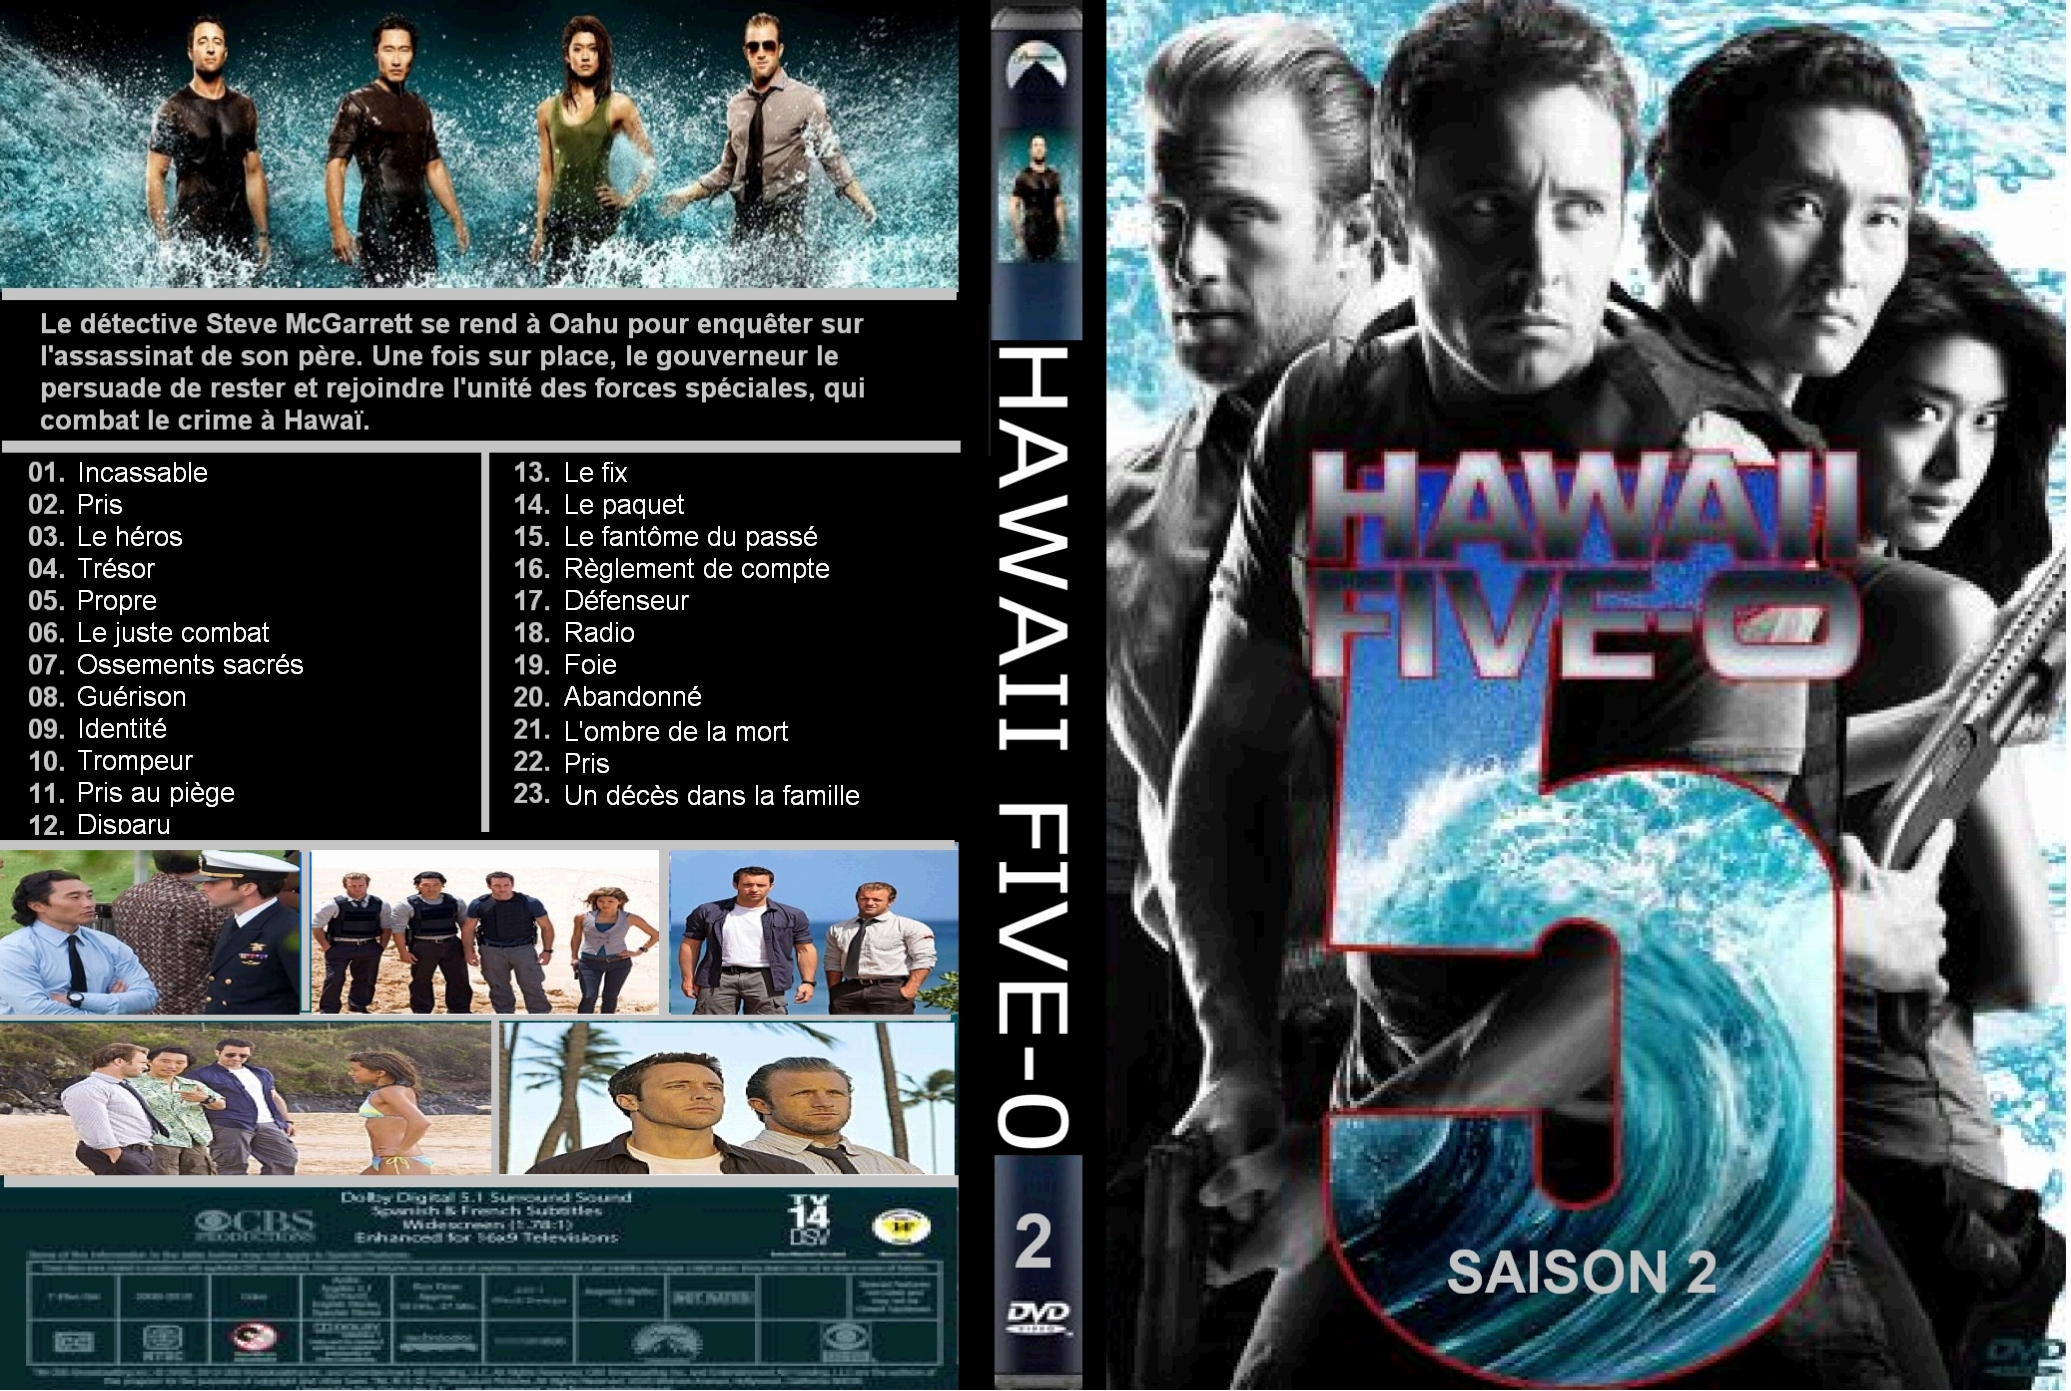 Jaquette DVD Hawaii Five-O Saison 2 custom